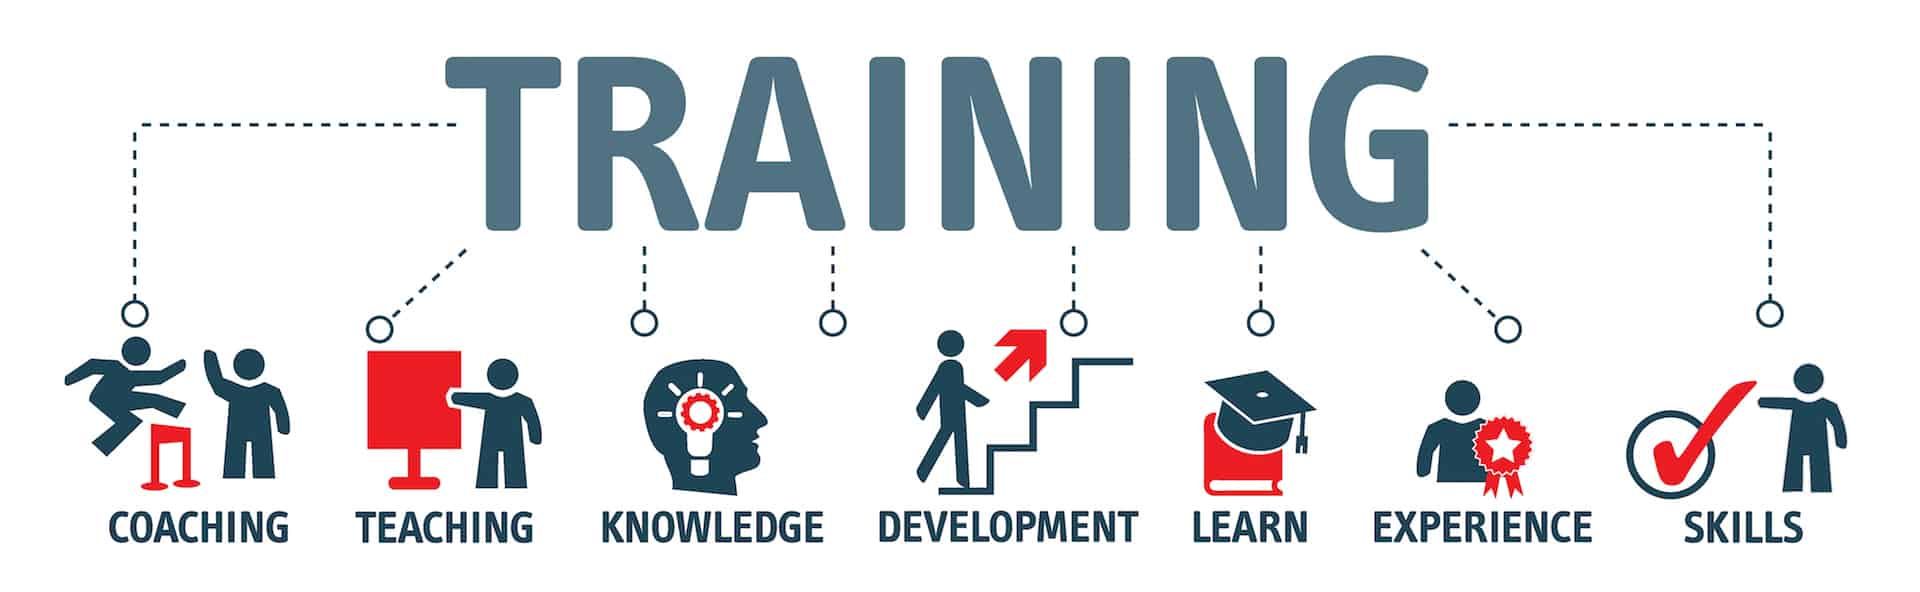 Western Training Solutions - Training Principles 